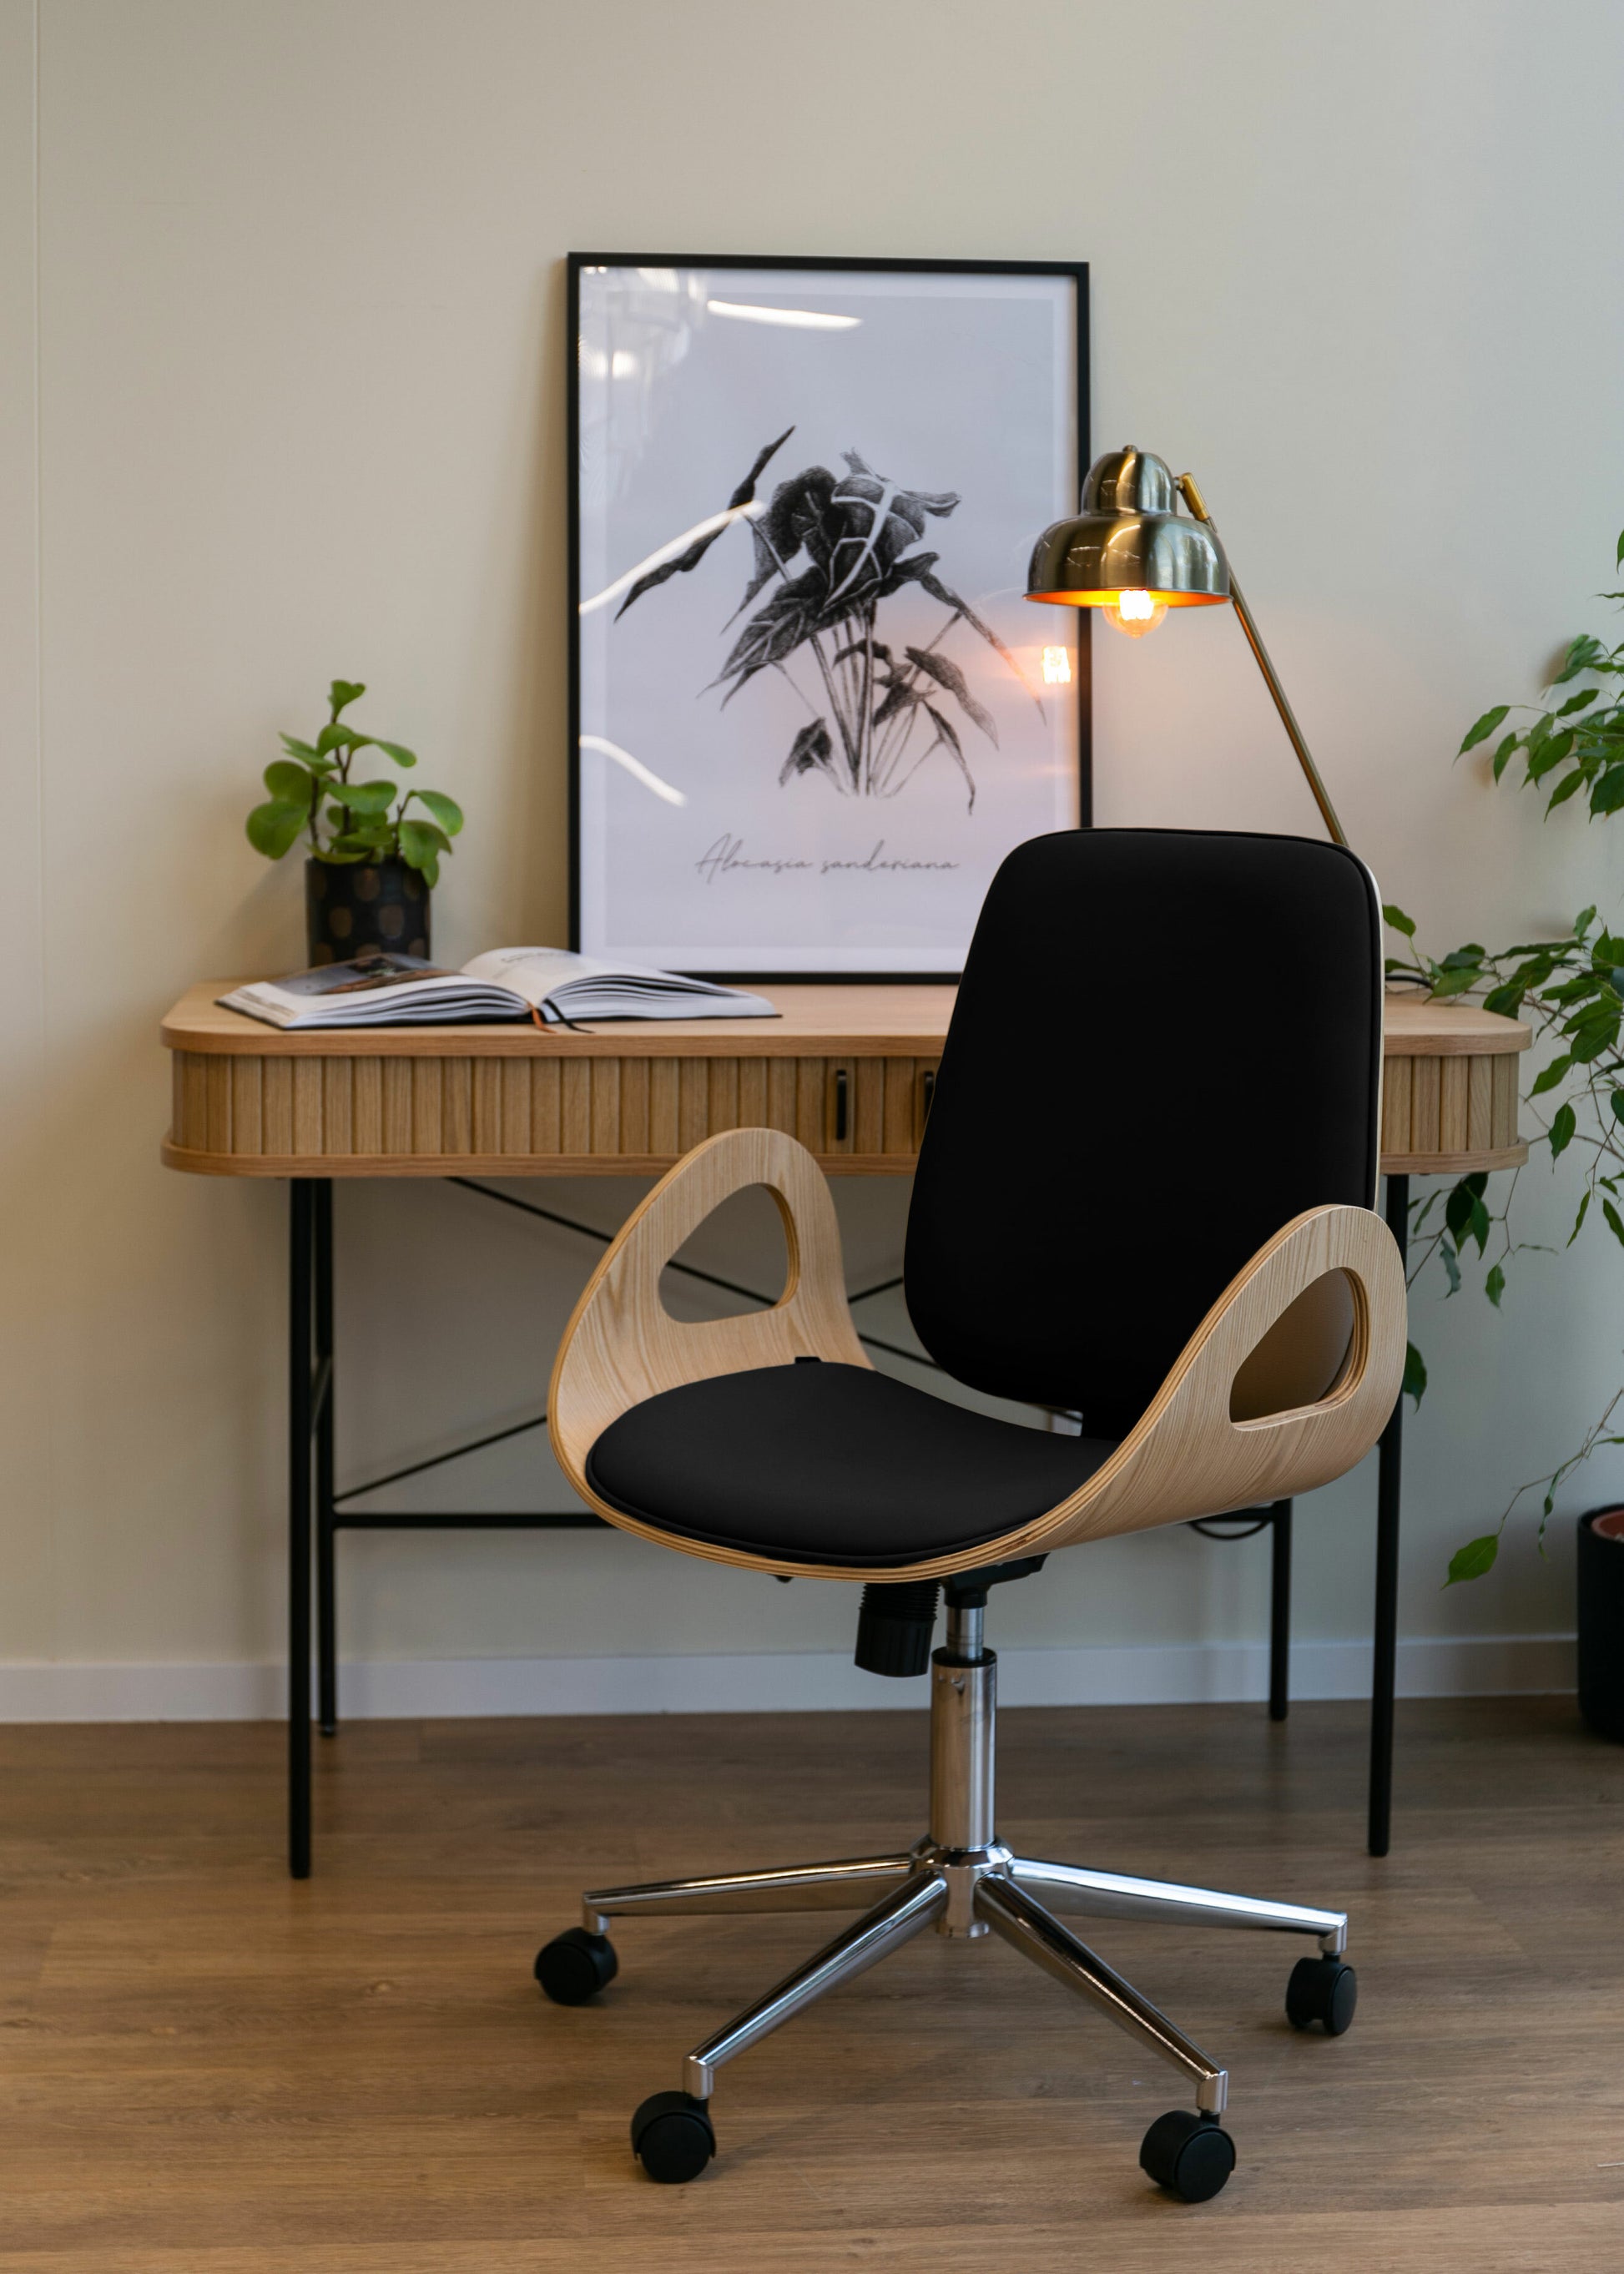 Grozāms koka krēsls Buro, melns eko-āda/saplāksnis 91/56/58 cm - N1 Home